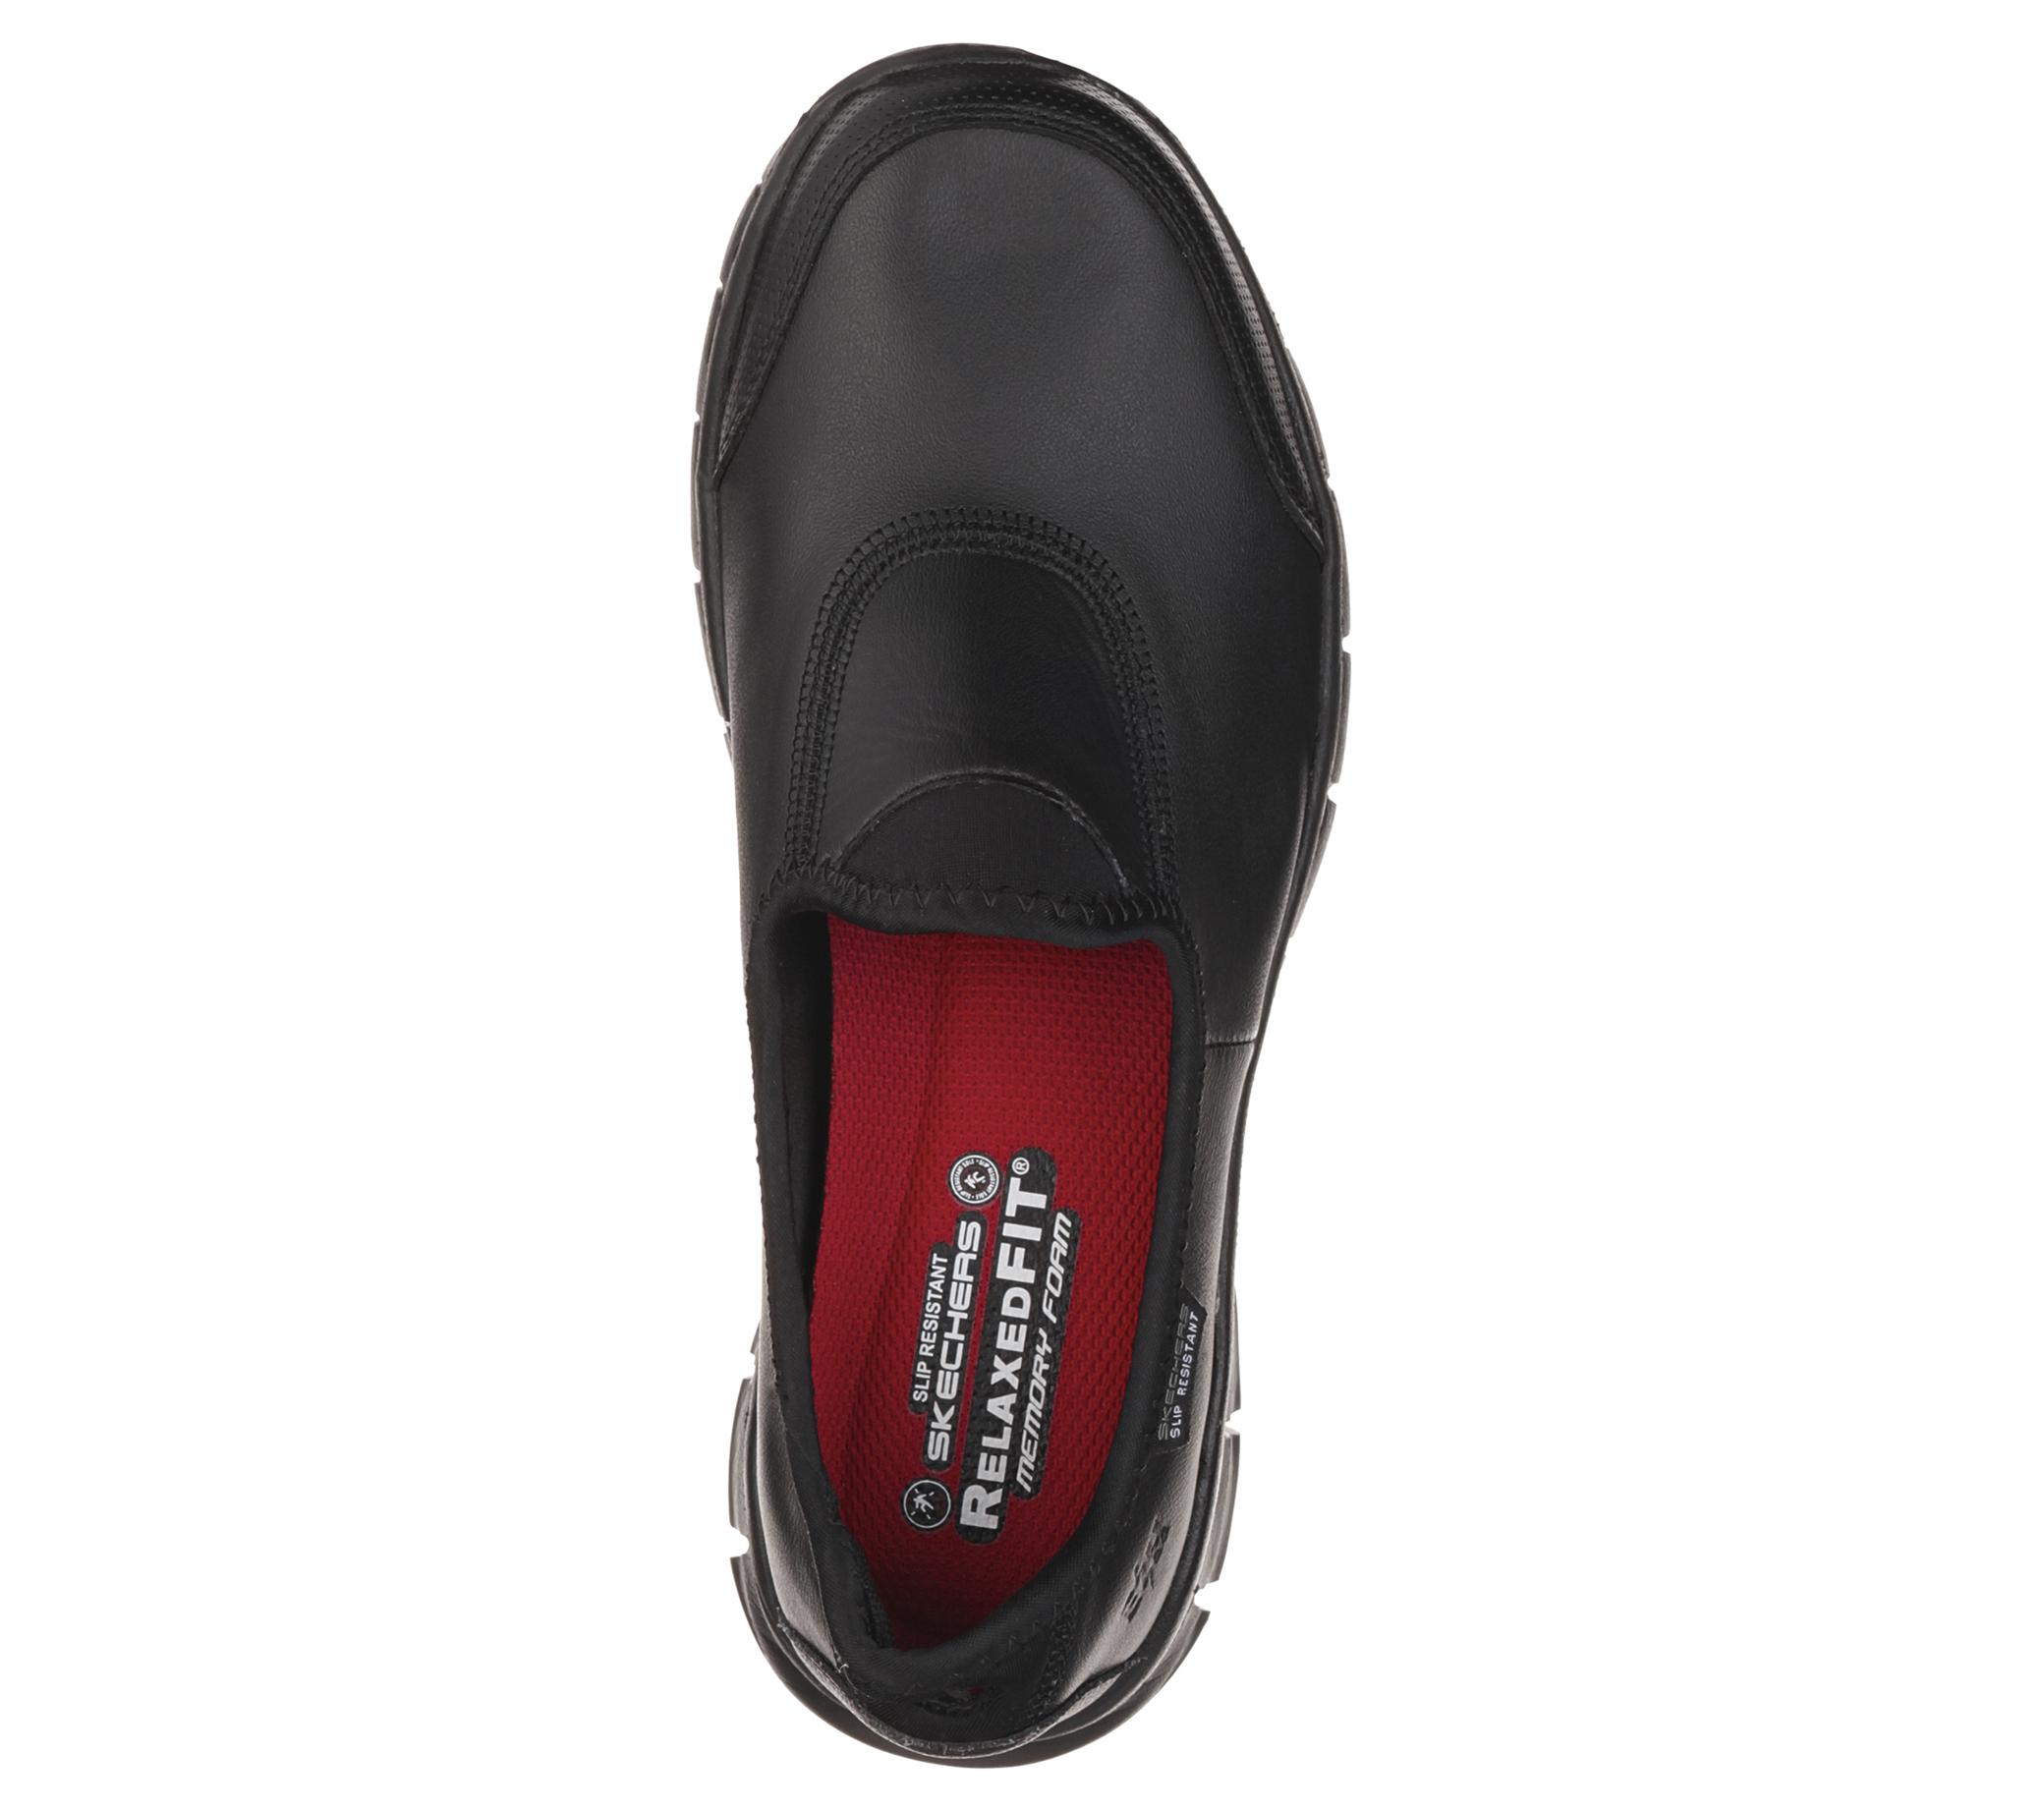 skechers slip resistant shoes memory foam